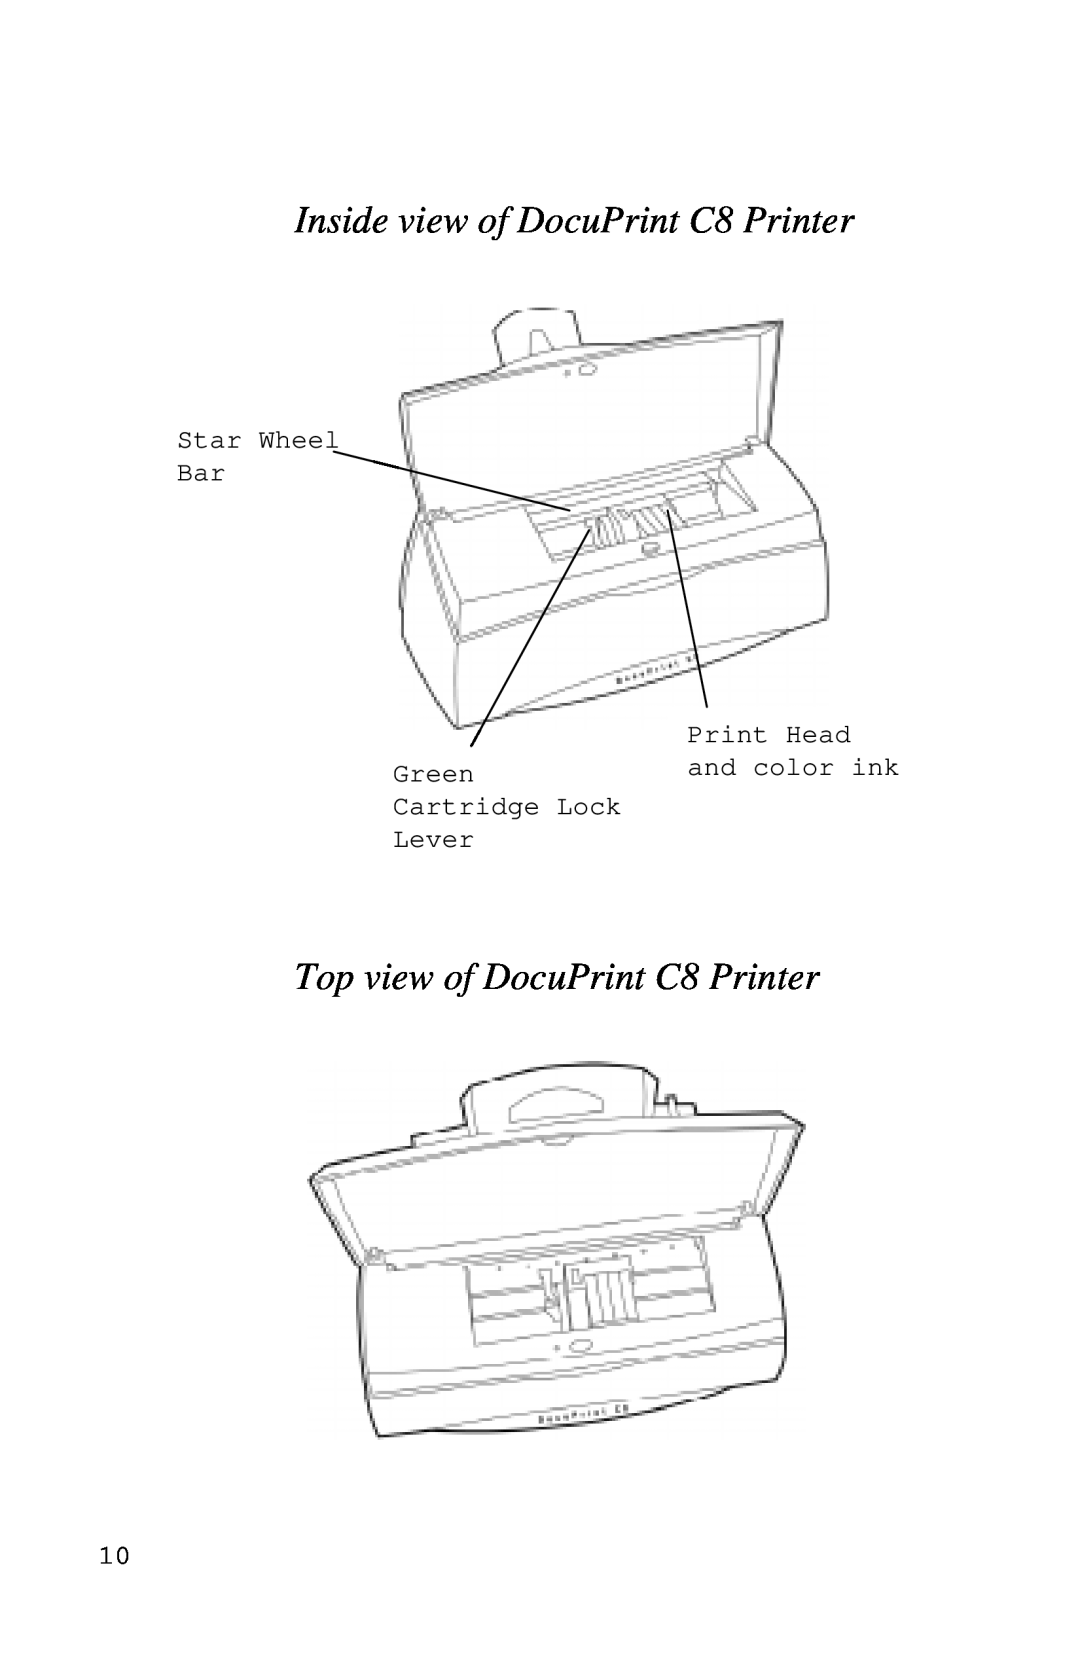 Xerox Inkjet Printer Inside view of DocuPrint C8 Printer, Top view of DocuPrint C8 Printer, Star Wheel Bar, Print Head 